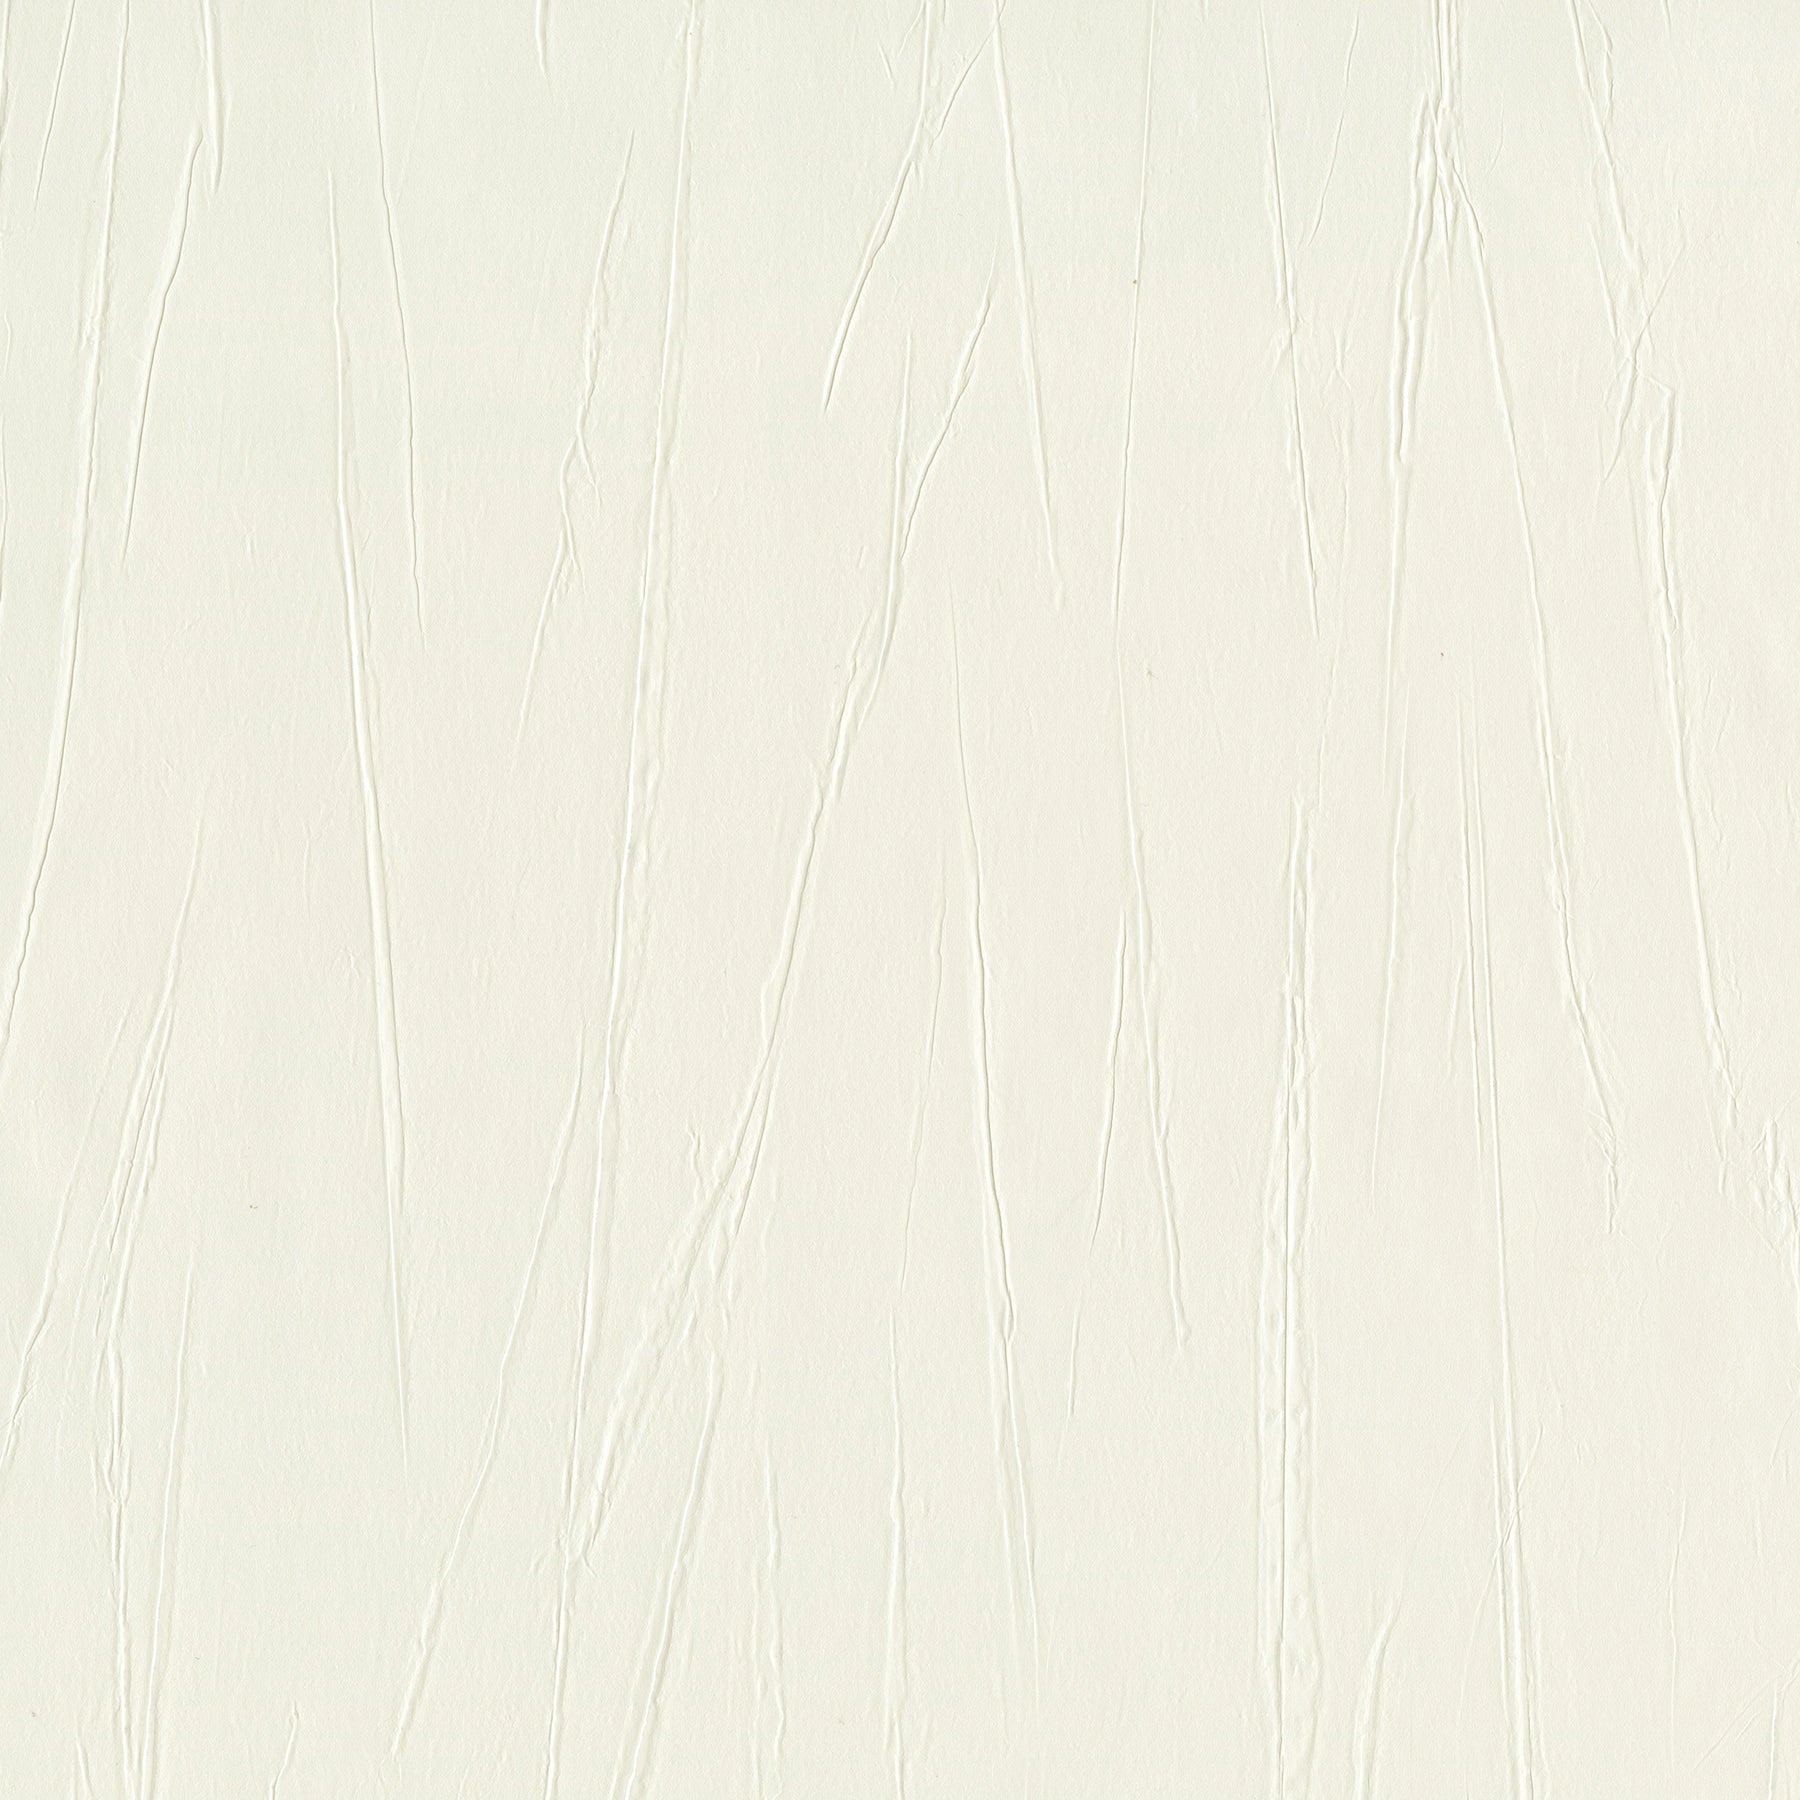 Find 2773-605907 Neutral Black White Whites & Off-Whites Textured Wallpaper by Advantage